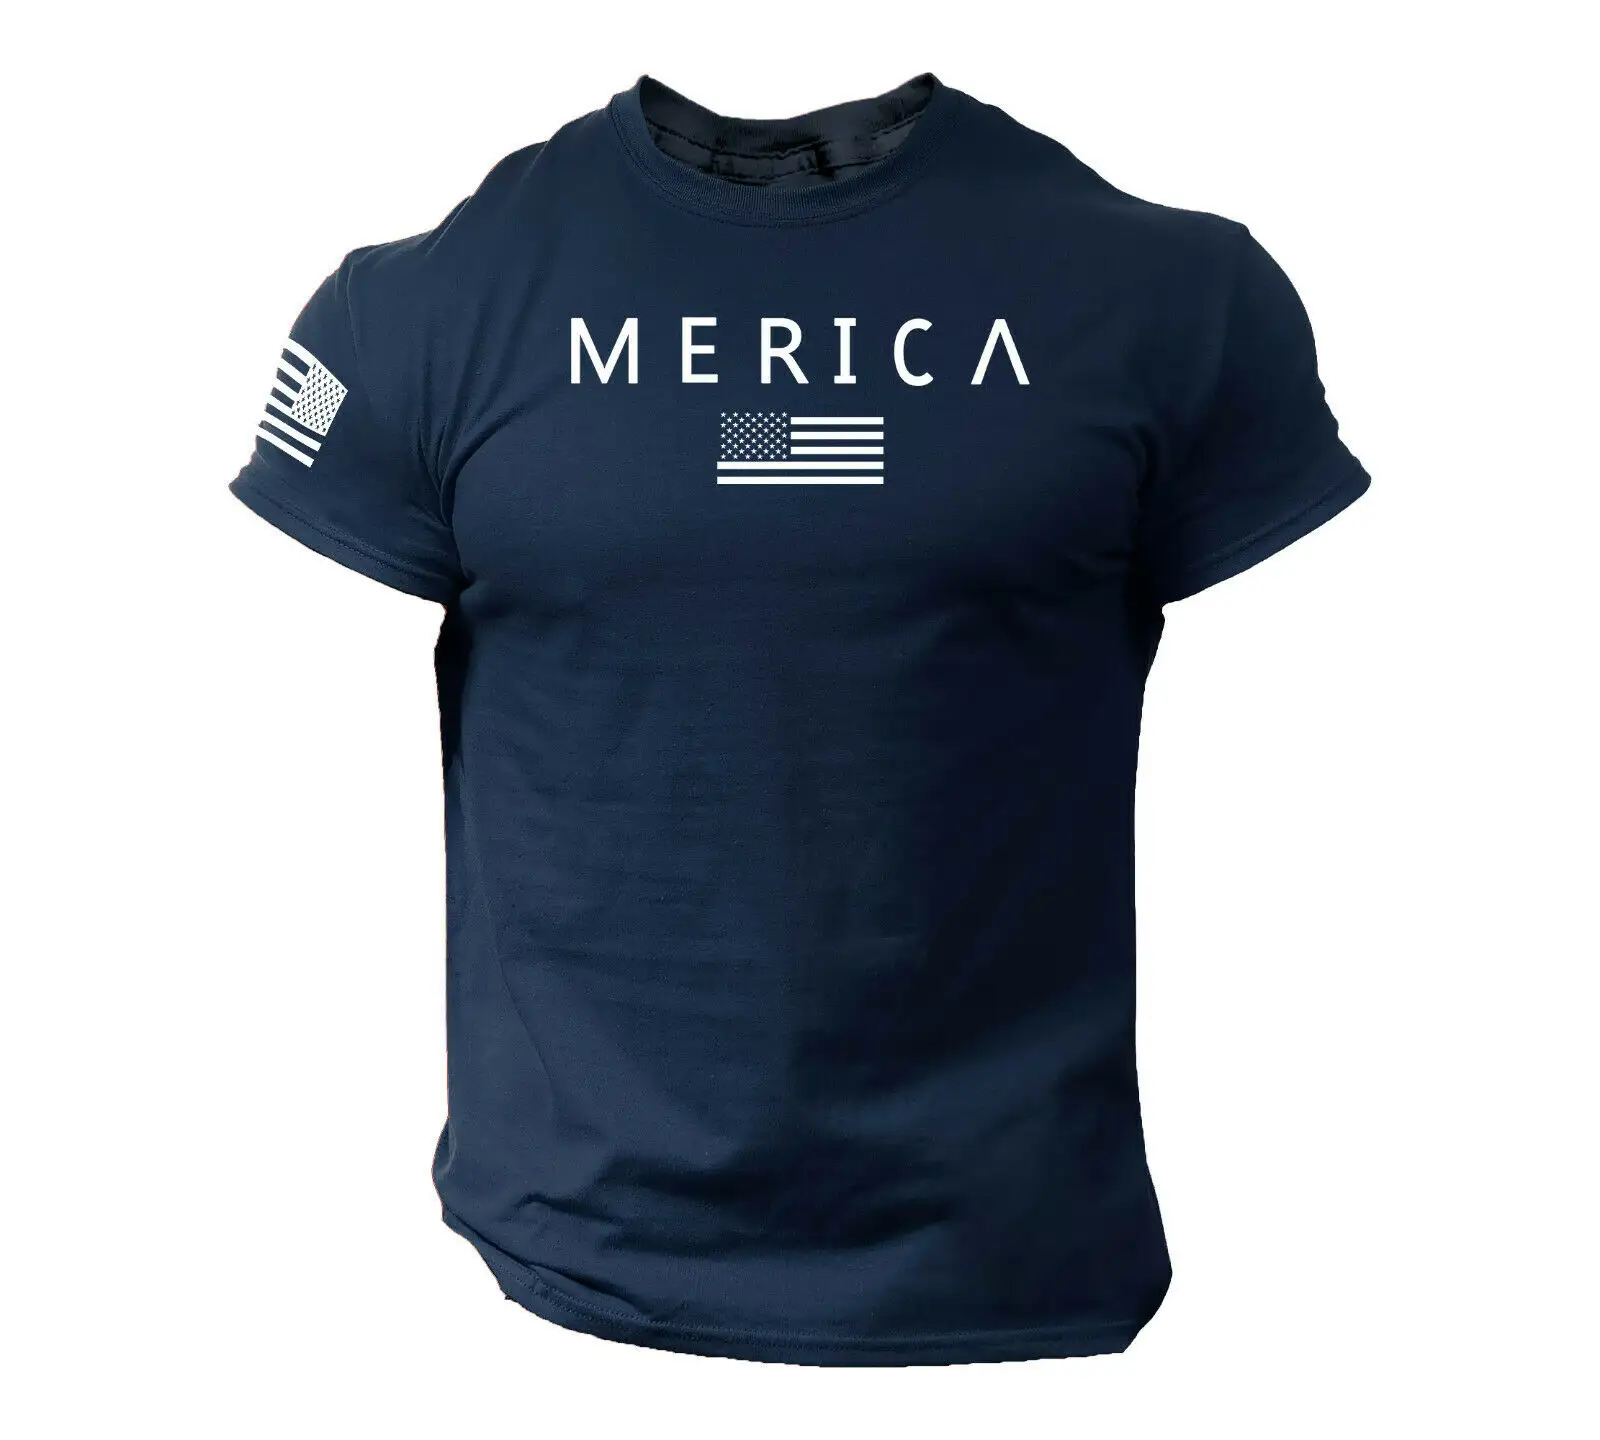 अमेरिका सेना शैली टी शर्ट संयुक्त राज्य अमेरिका फ्लैग अमेरिकी सैन्य बंदूक शीर्ष उच्च गुणवत्ता डिजिटल मुद्रित टी शर्ट